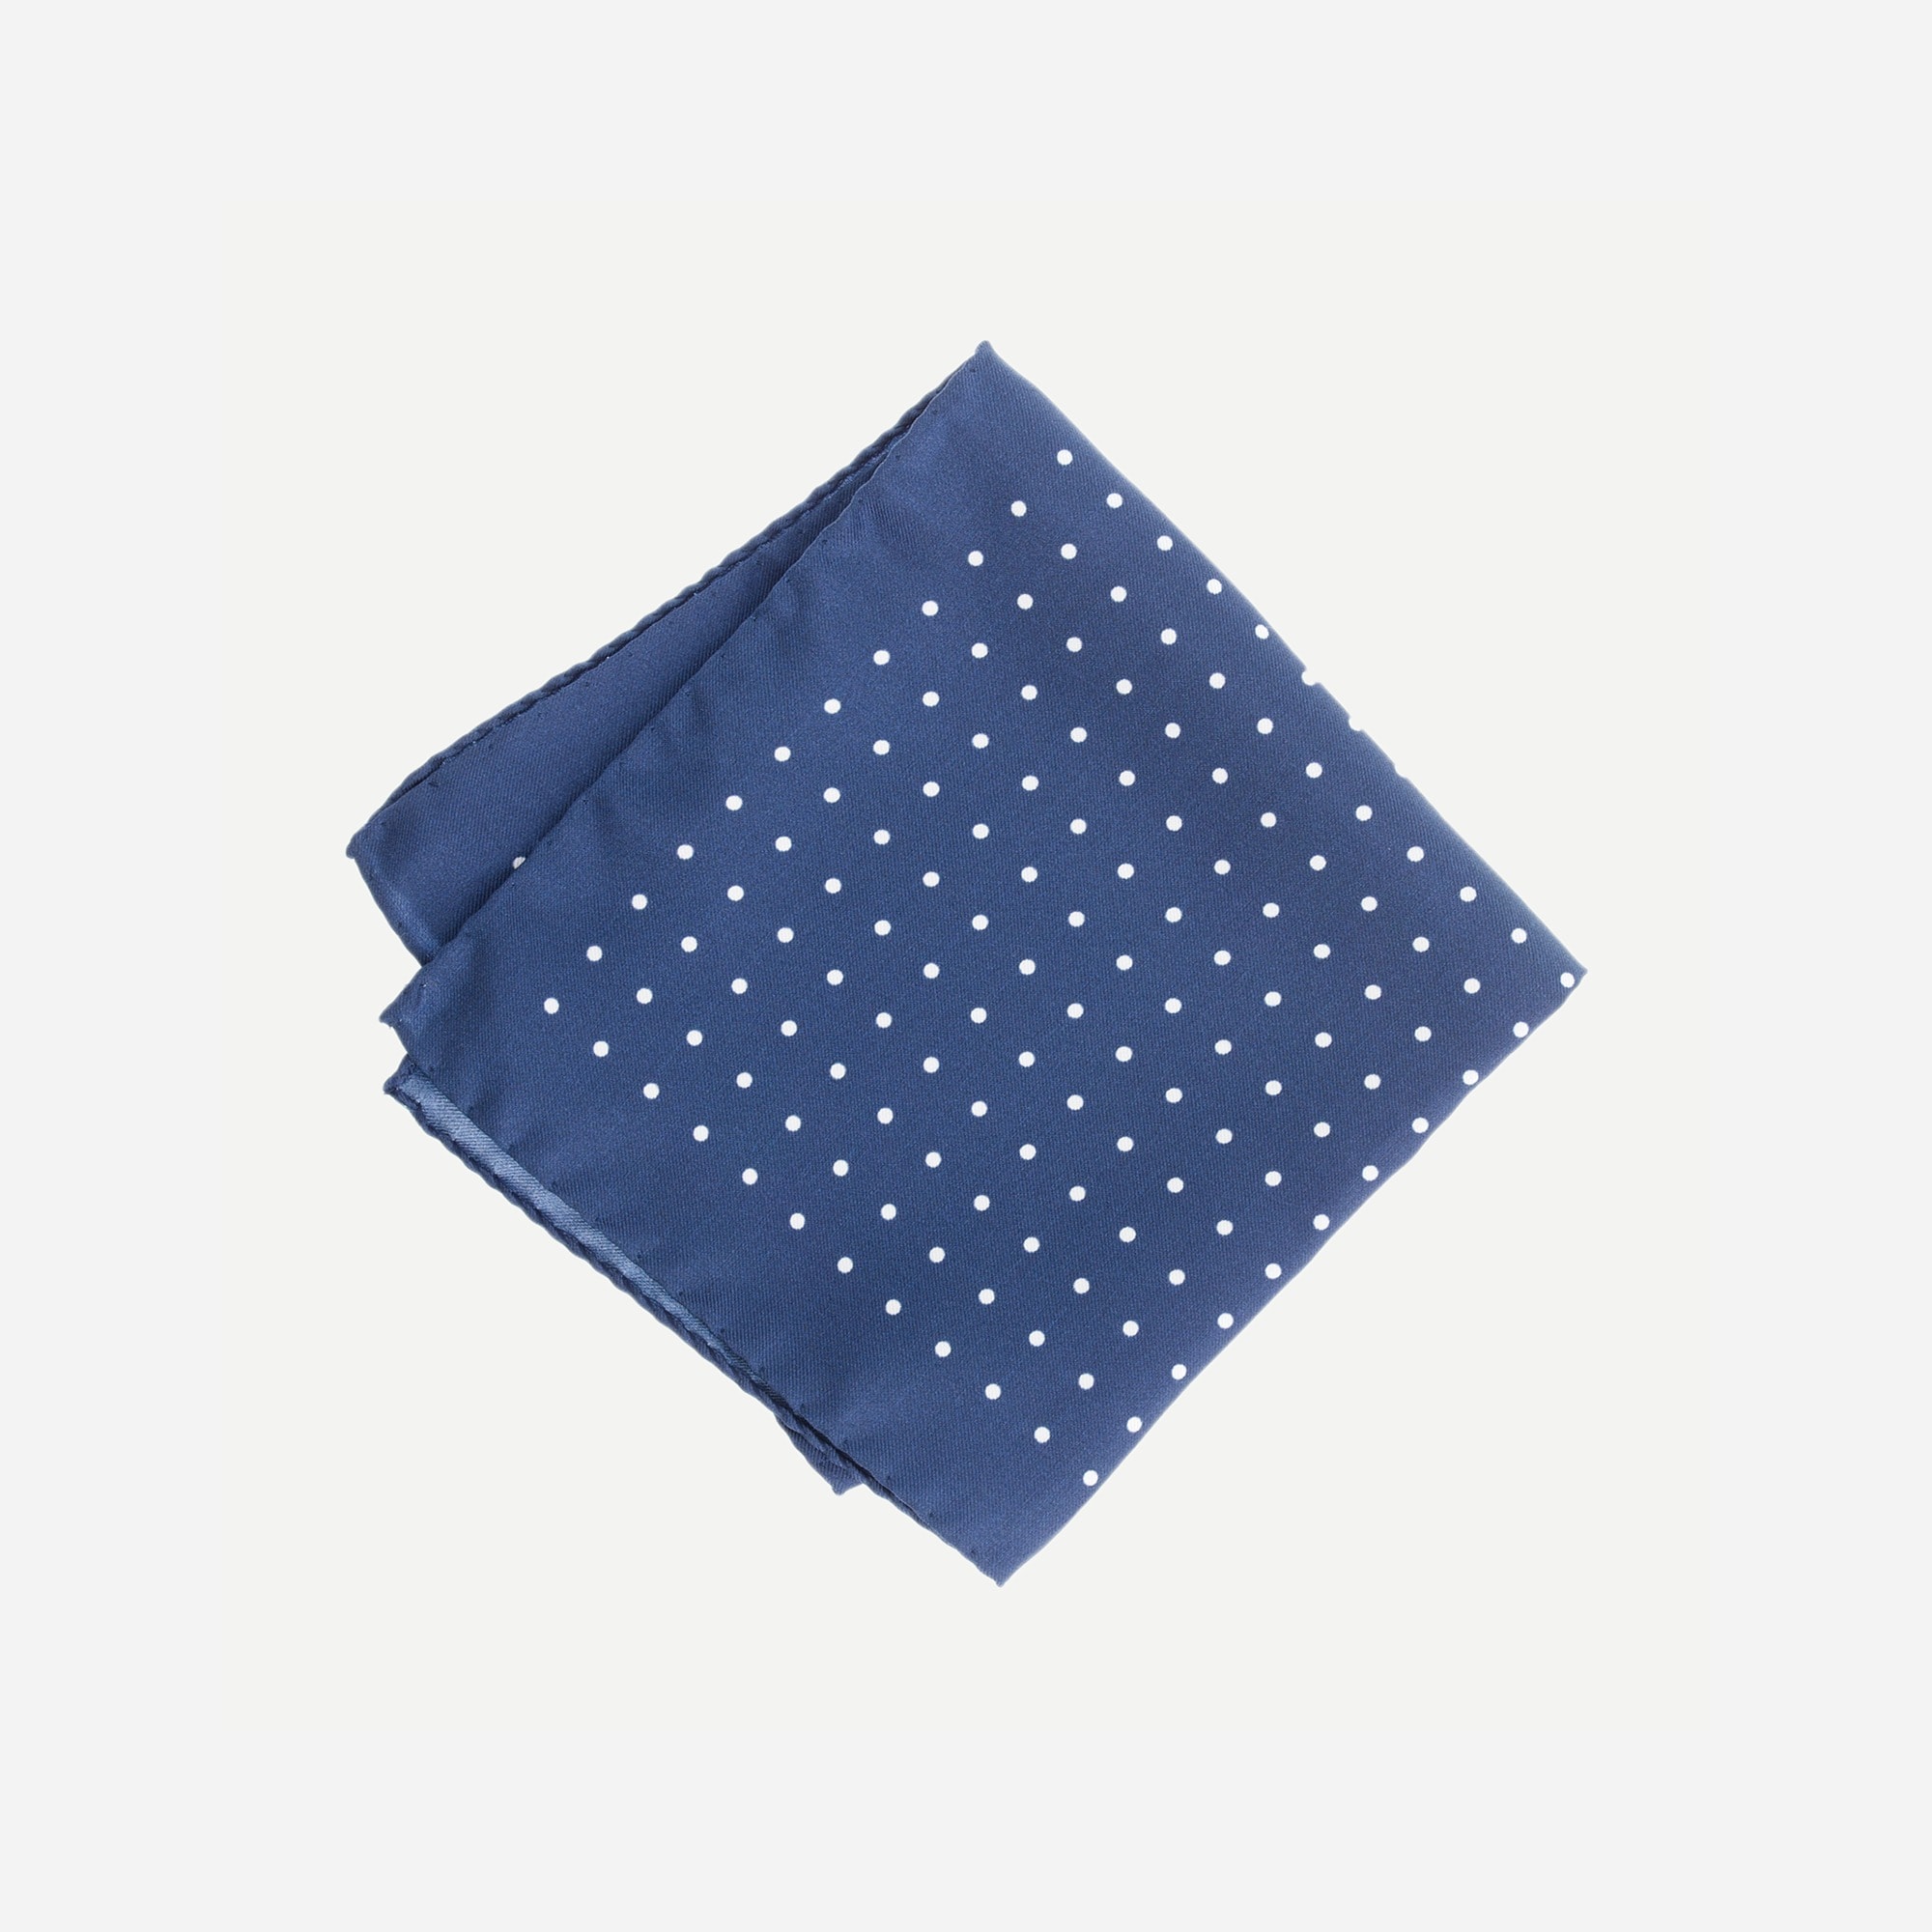  Italian silk pocket square in classic dot